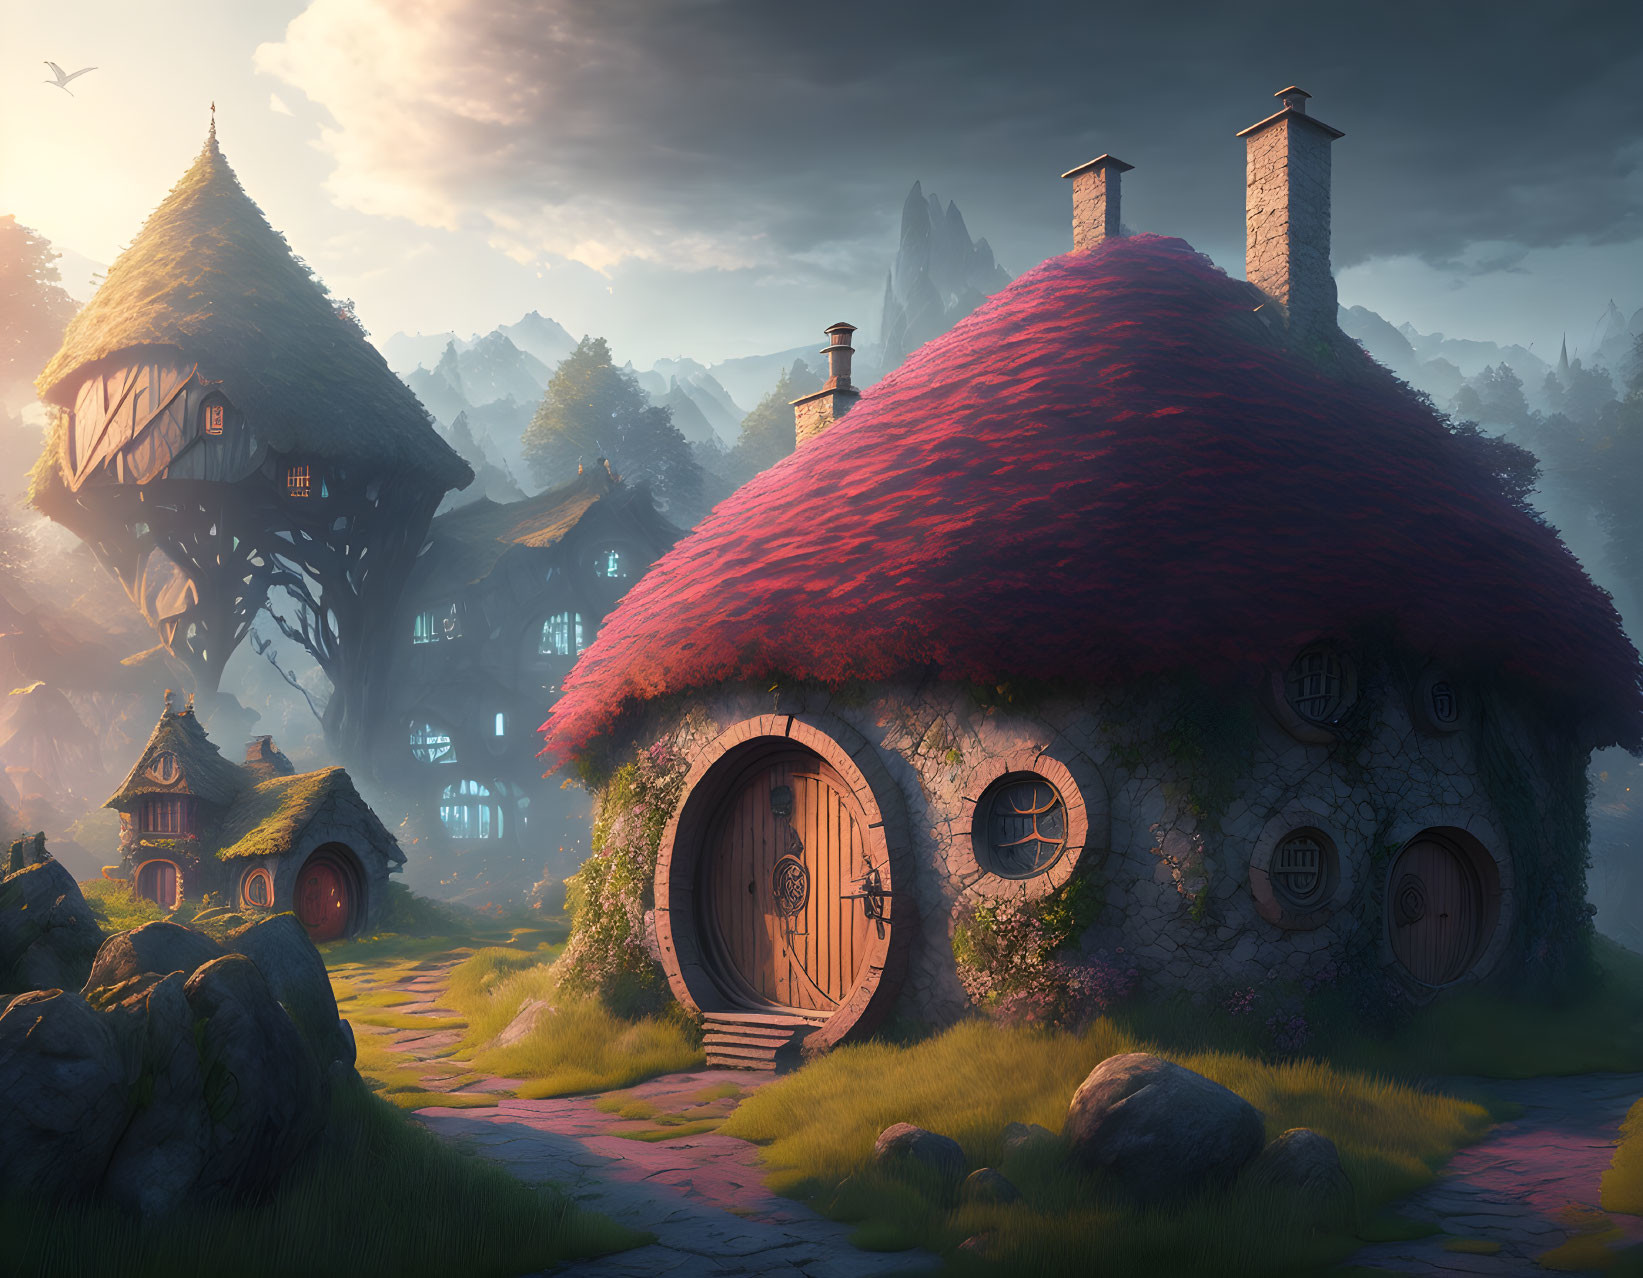 hobbit house 5